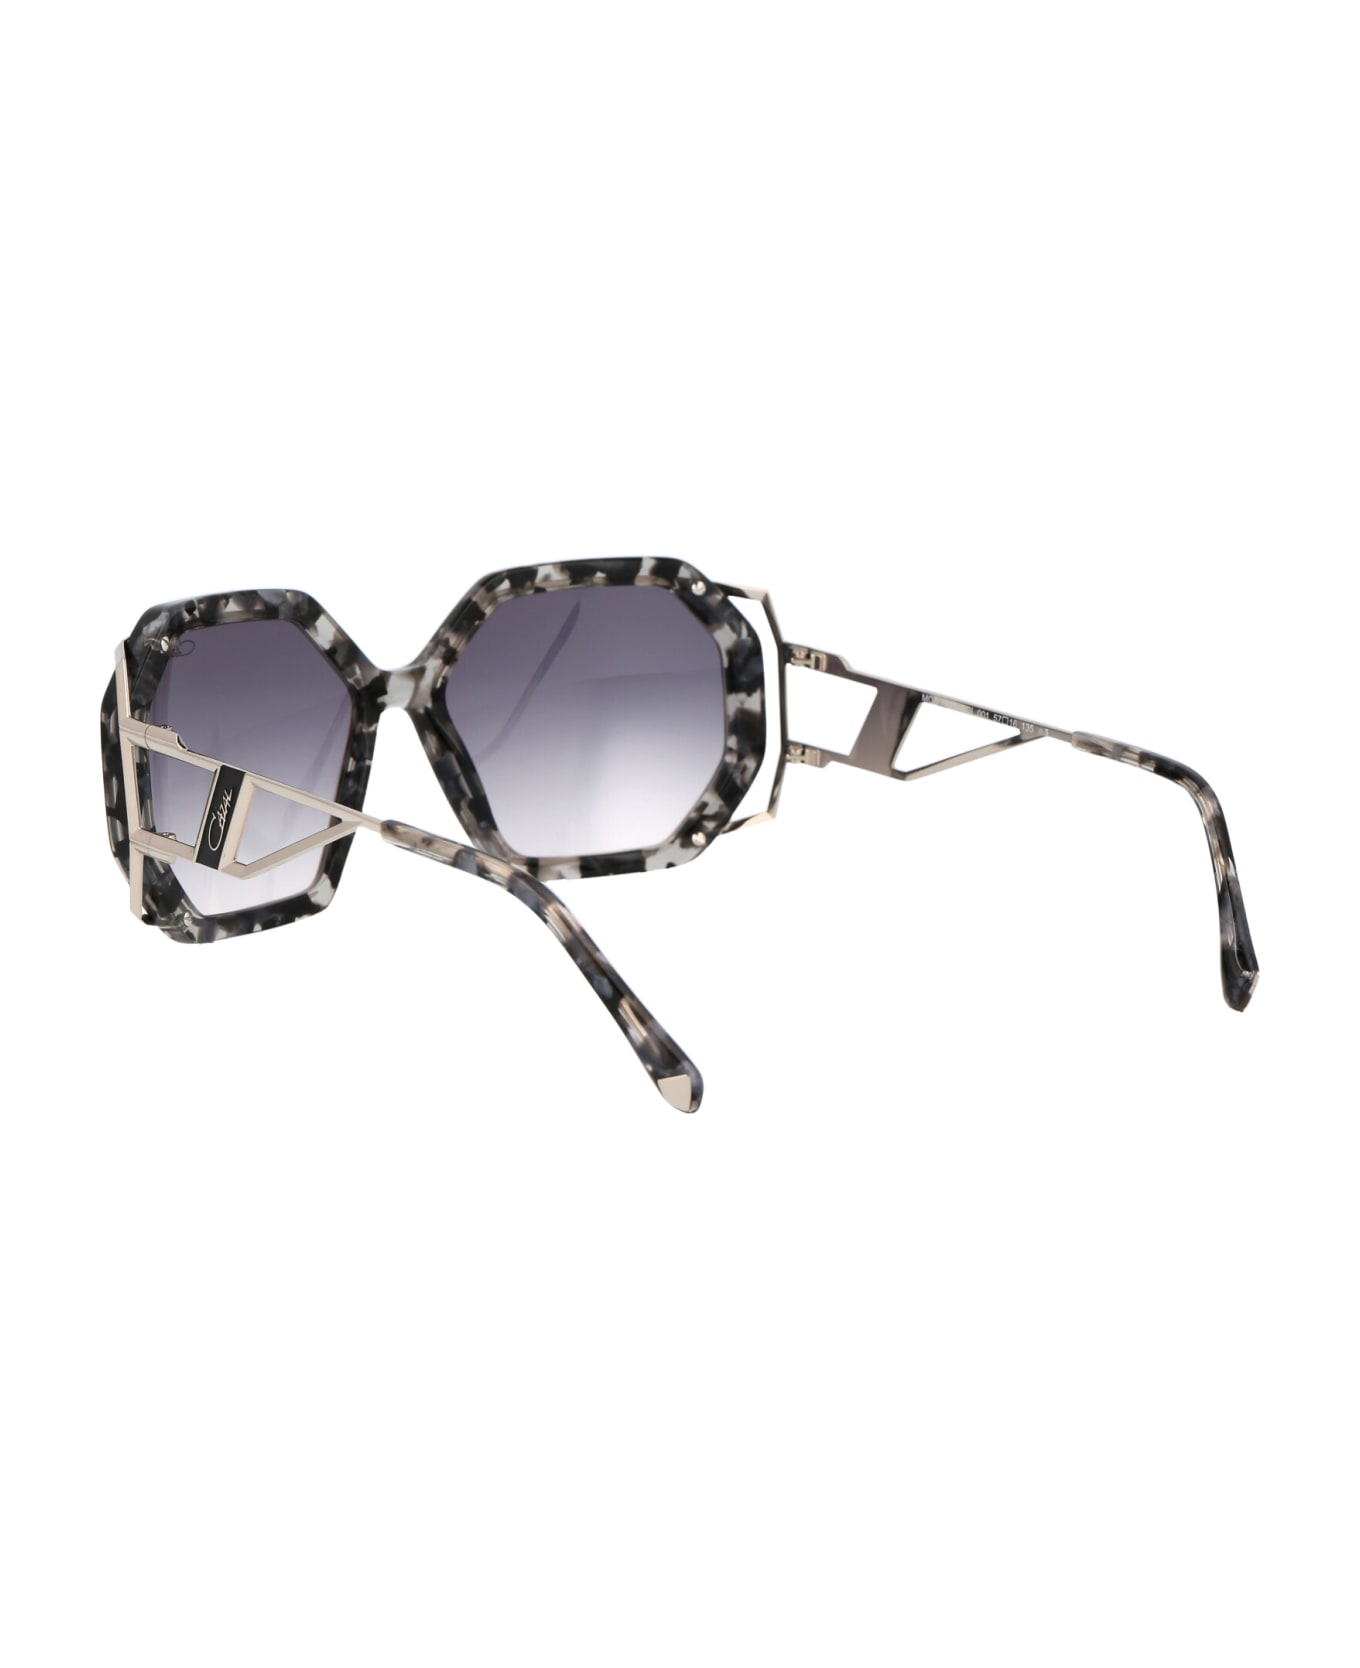 Cazal Mod. 8505 Sunglasses - 001 GREY SILVER